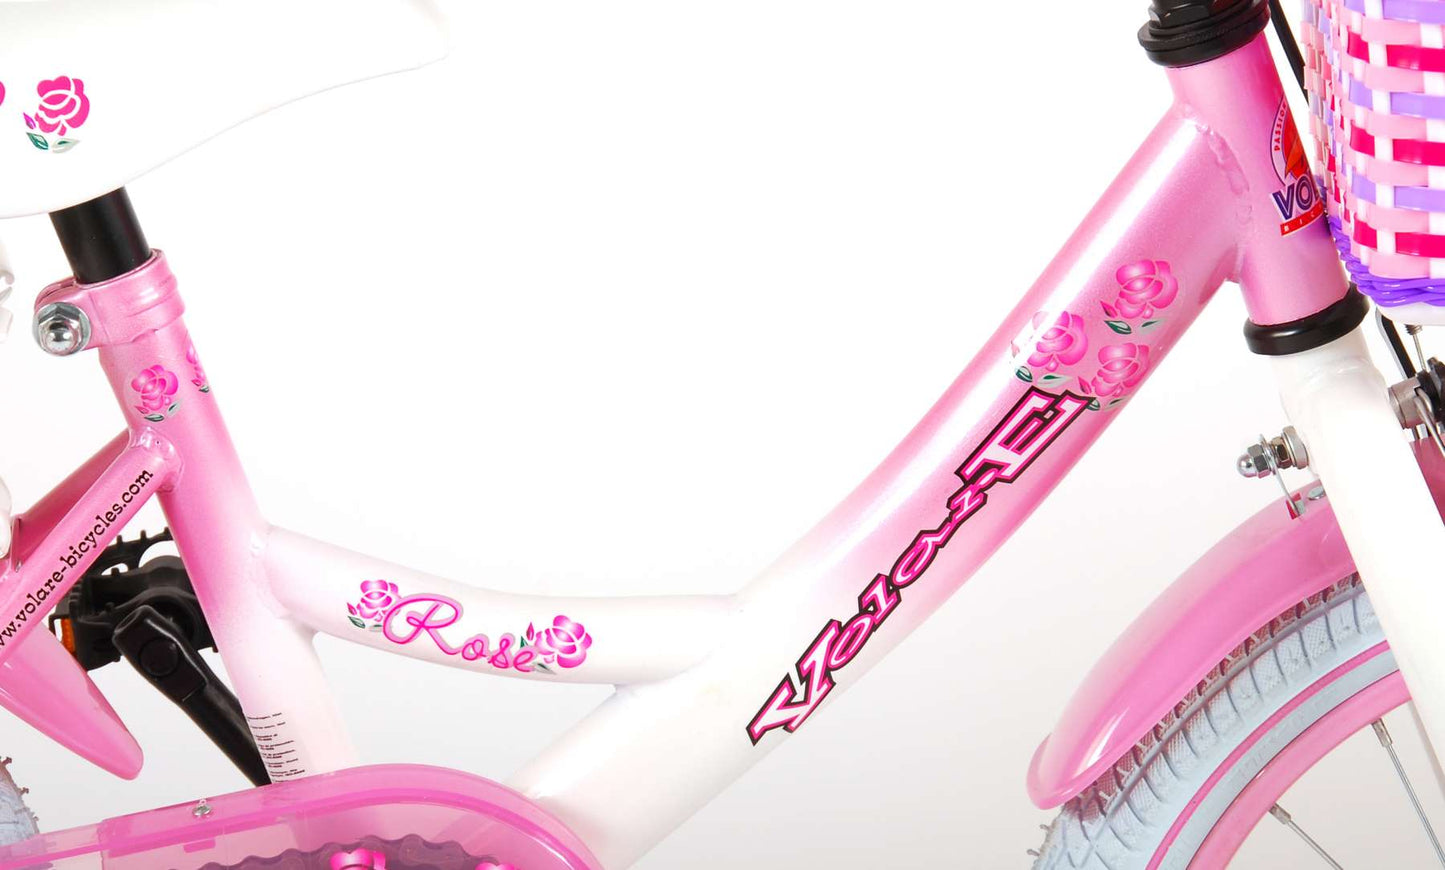 Bicycle per bambini di Vlatare Rose - Girls - 16 pollici - Bianco rosa - 95% assemblato